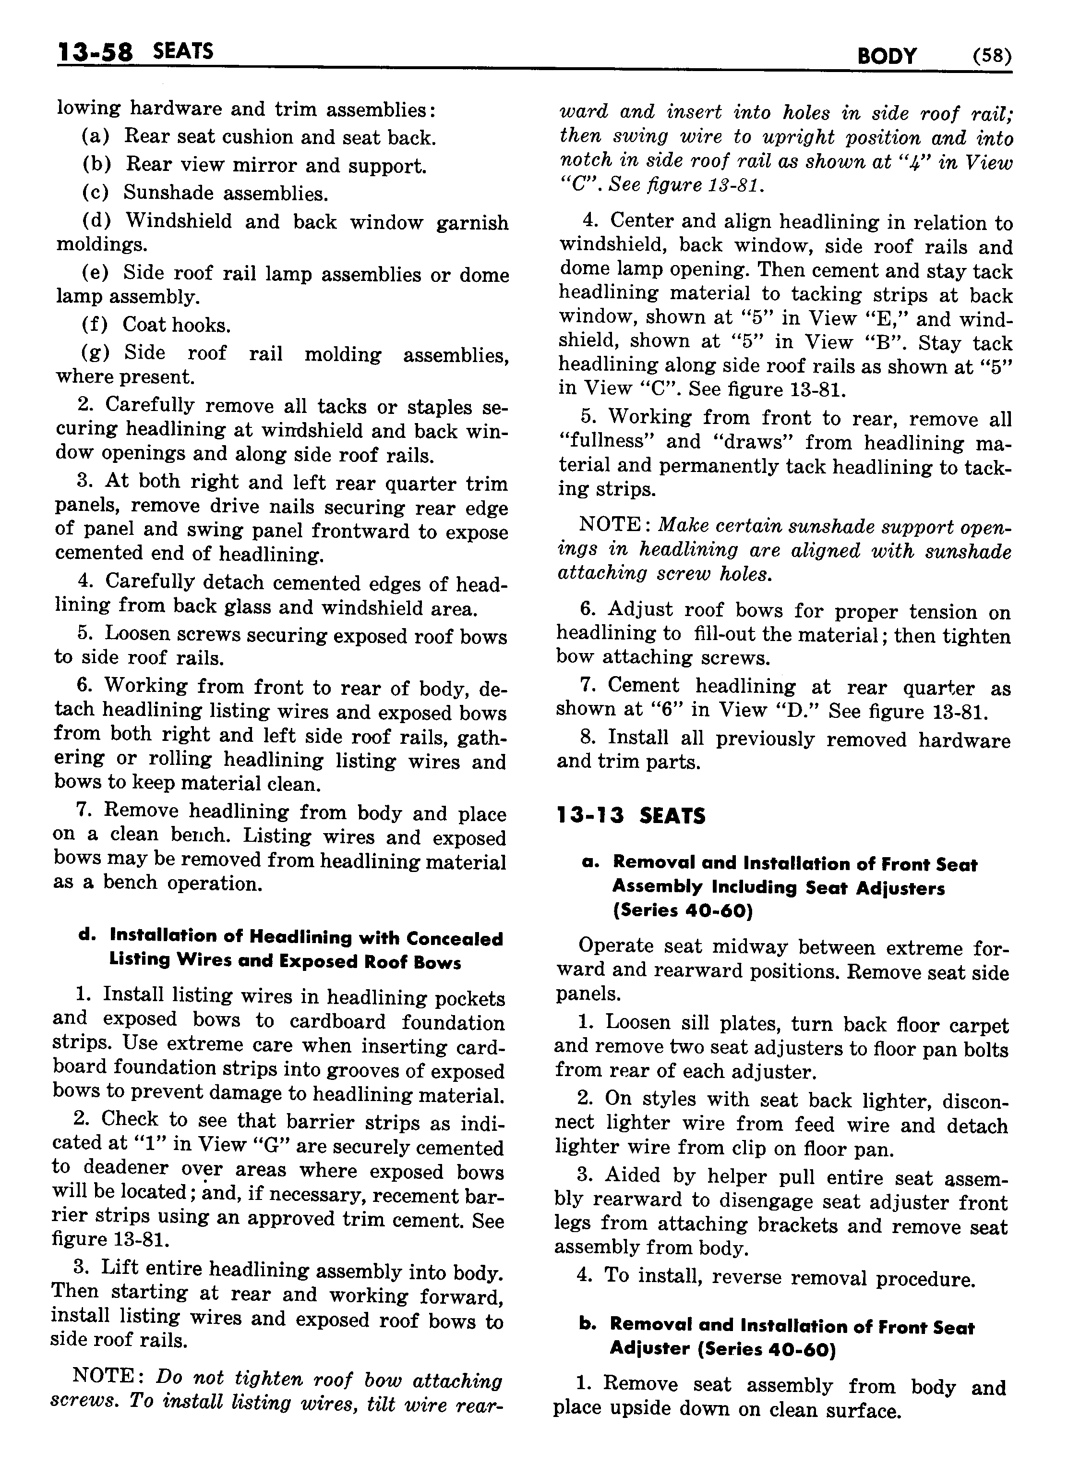 n_1957 Buick Body Service Manual-060-060.jpg